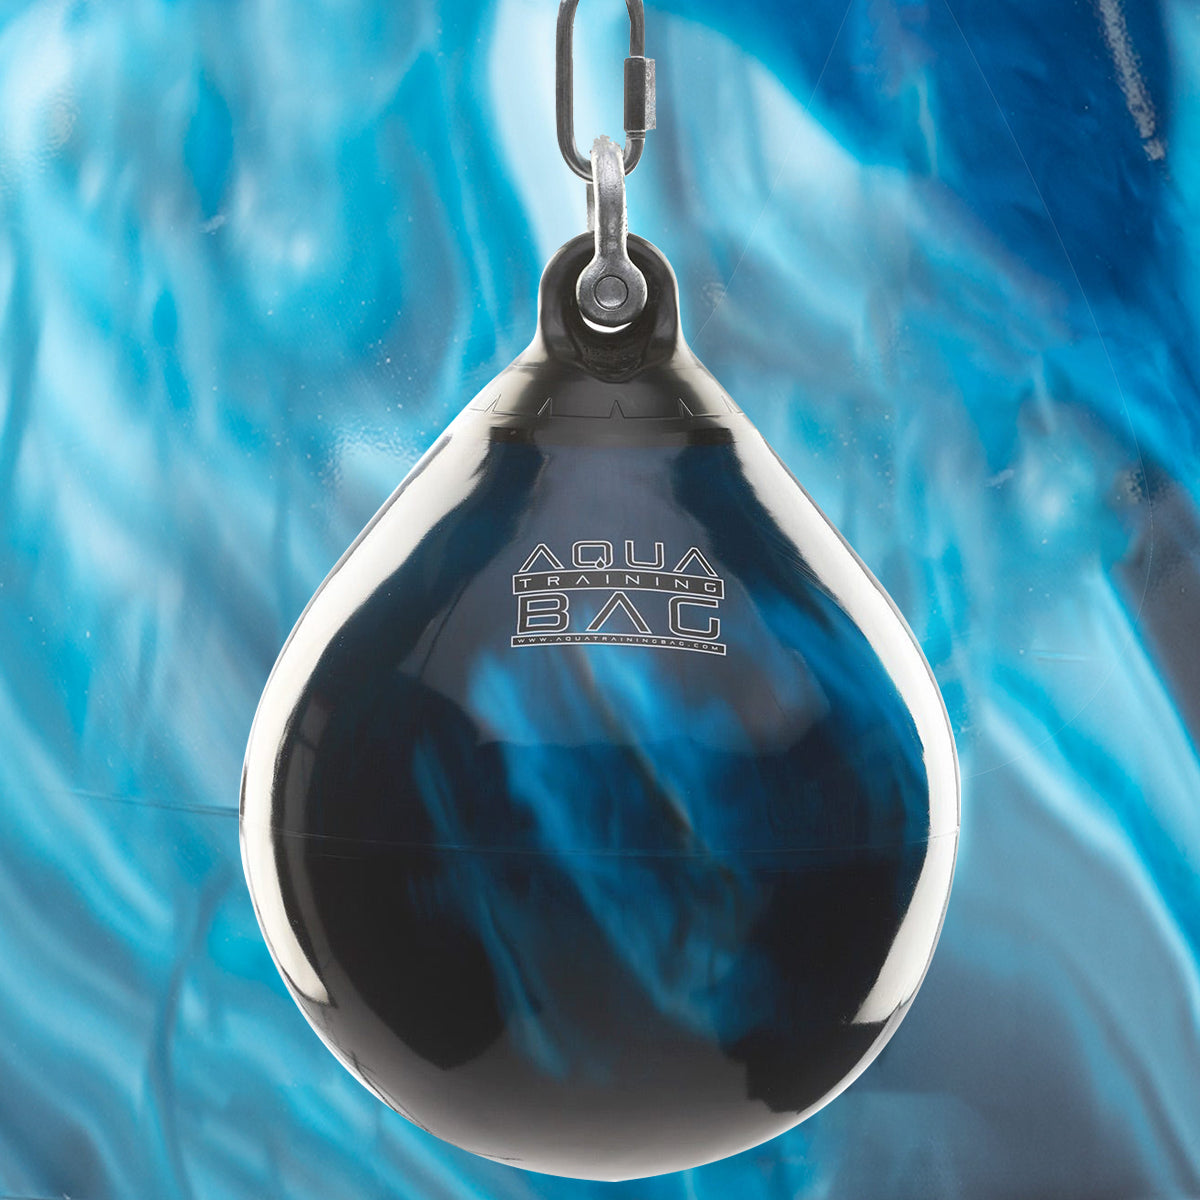 Aqua Training Bag 9" Head Hunter Hybrid Slip Ball/Punching Bag - 15 lbs. Aqua Training Bag